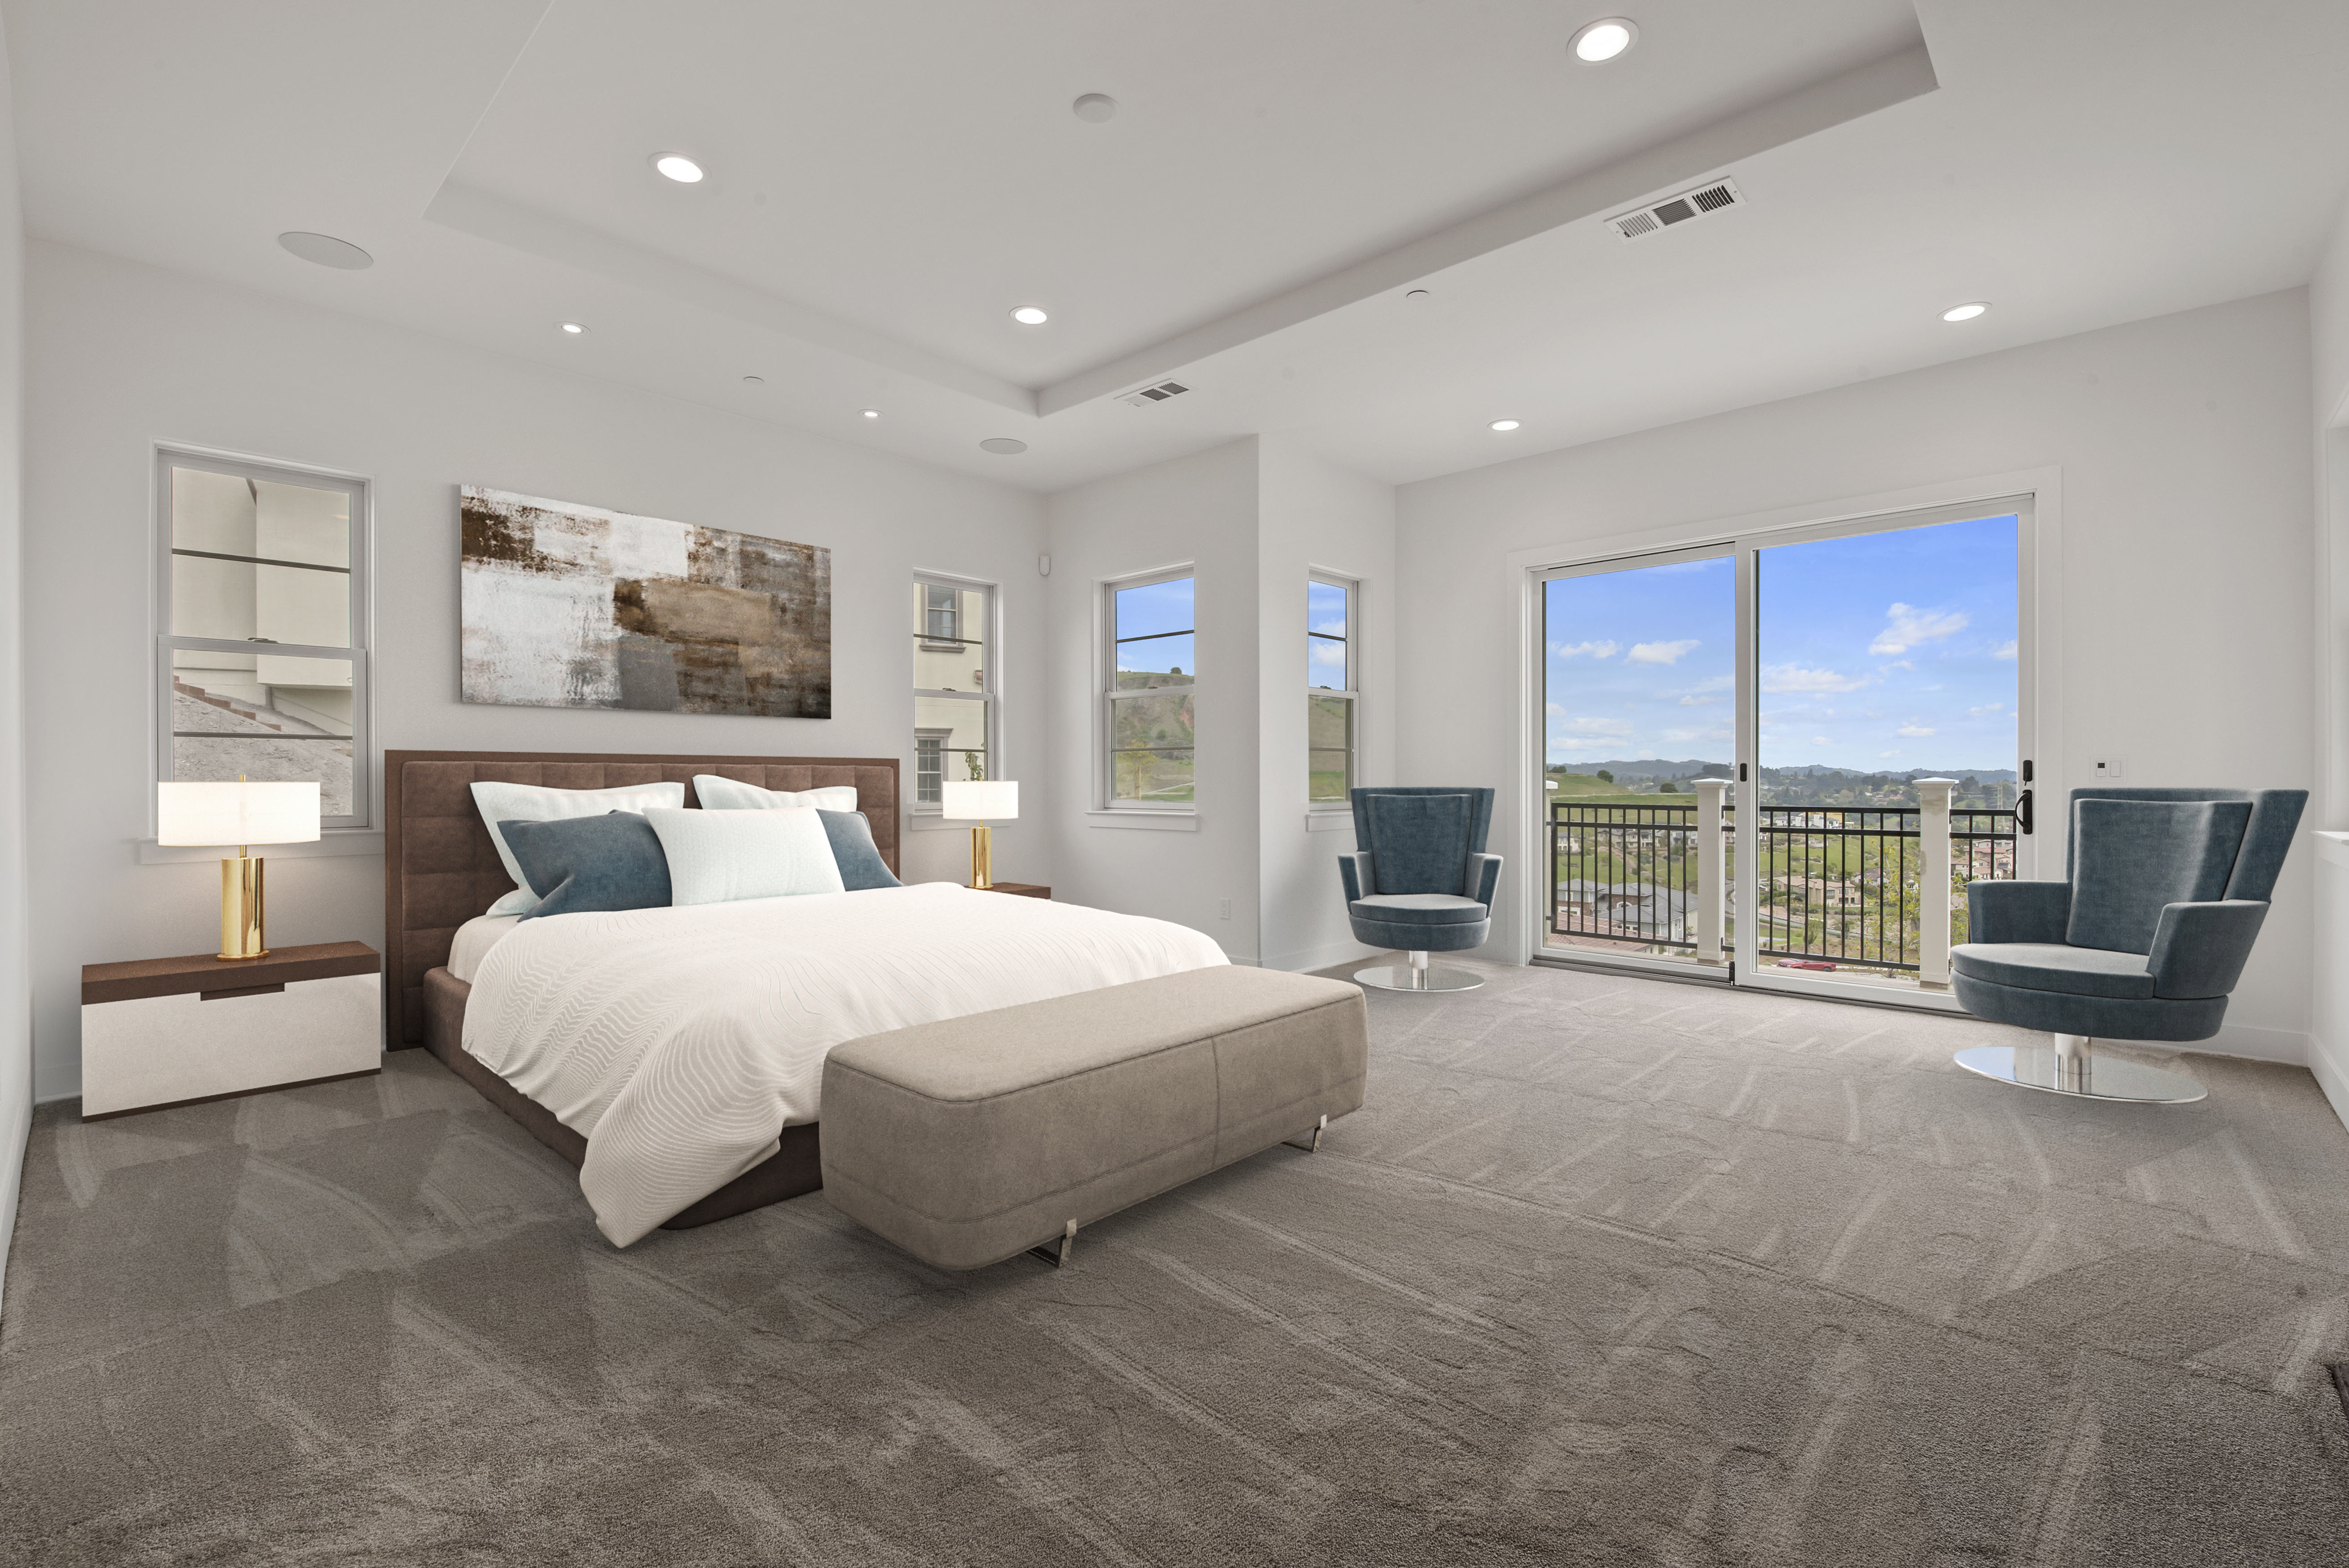 Spacious bedroom | Elite Builder Services